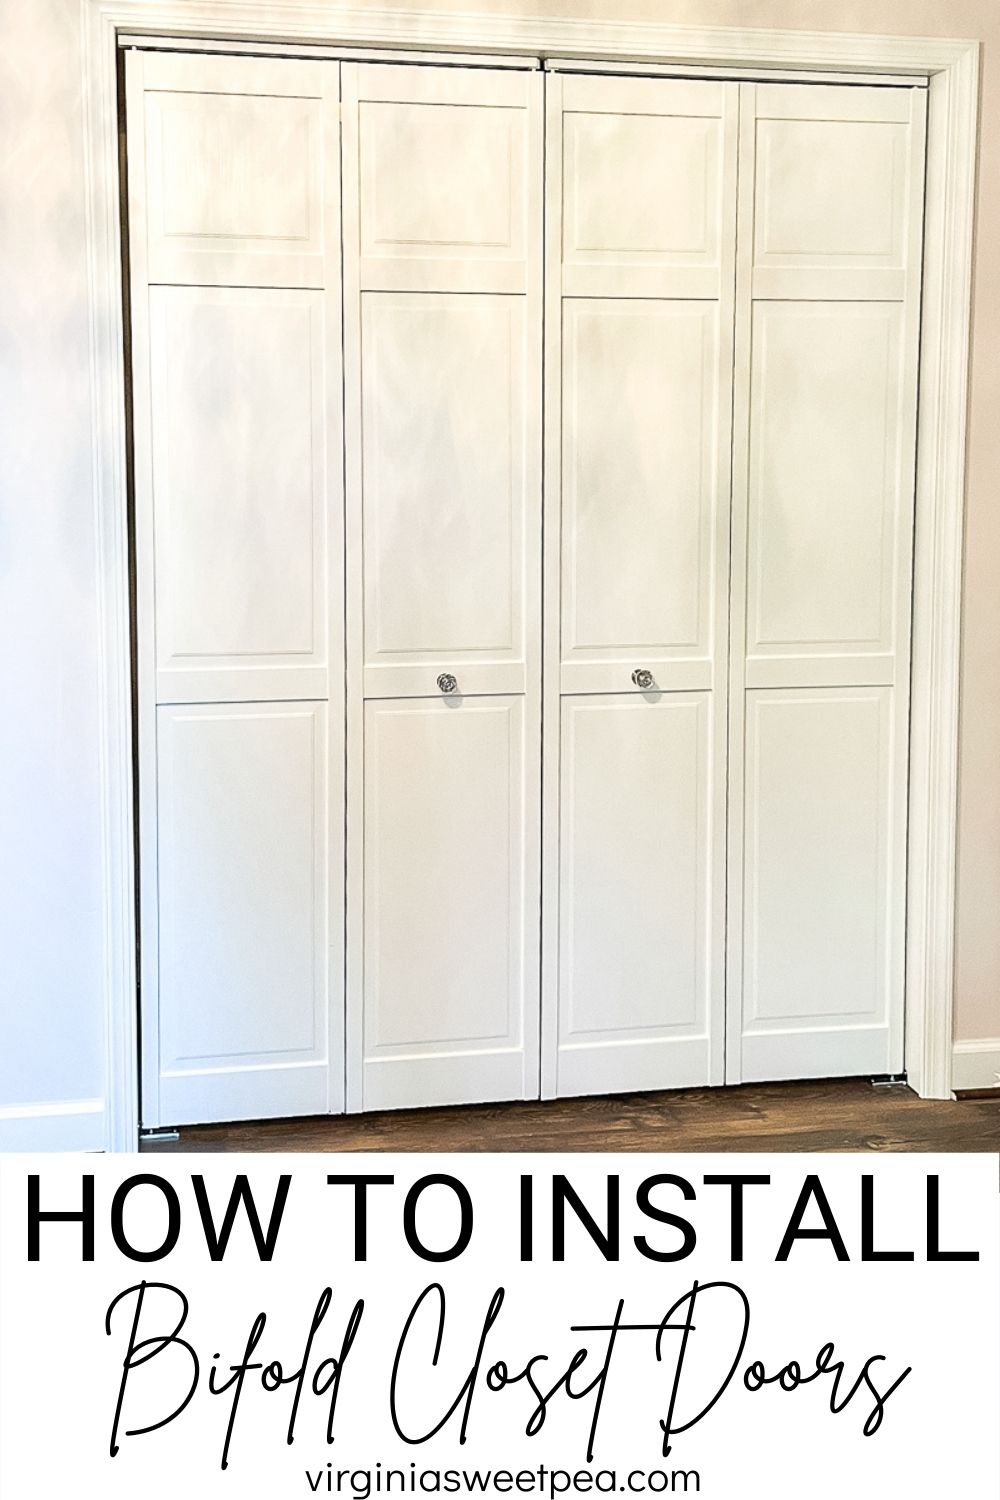 How to Install Bifold Closet Doors